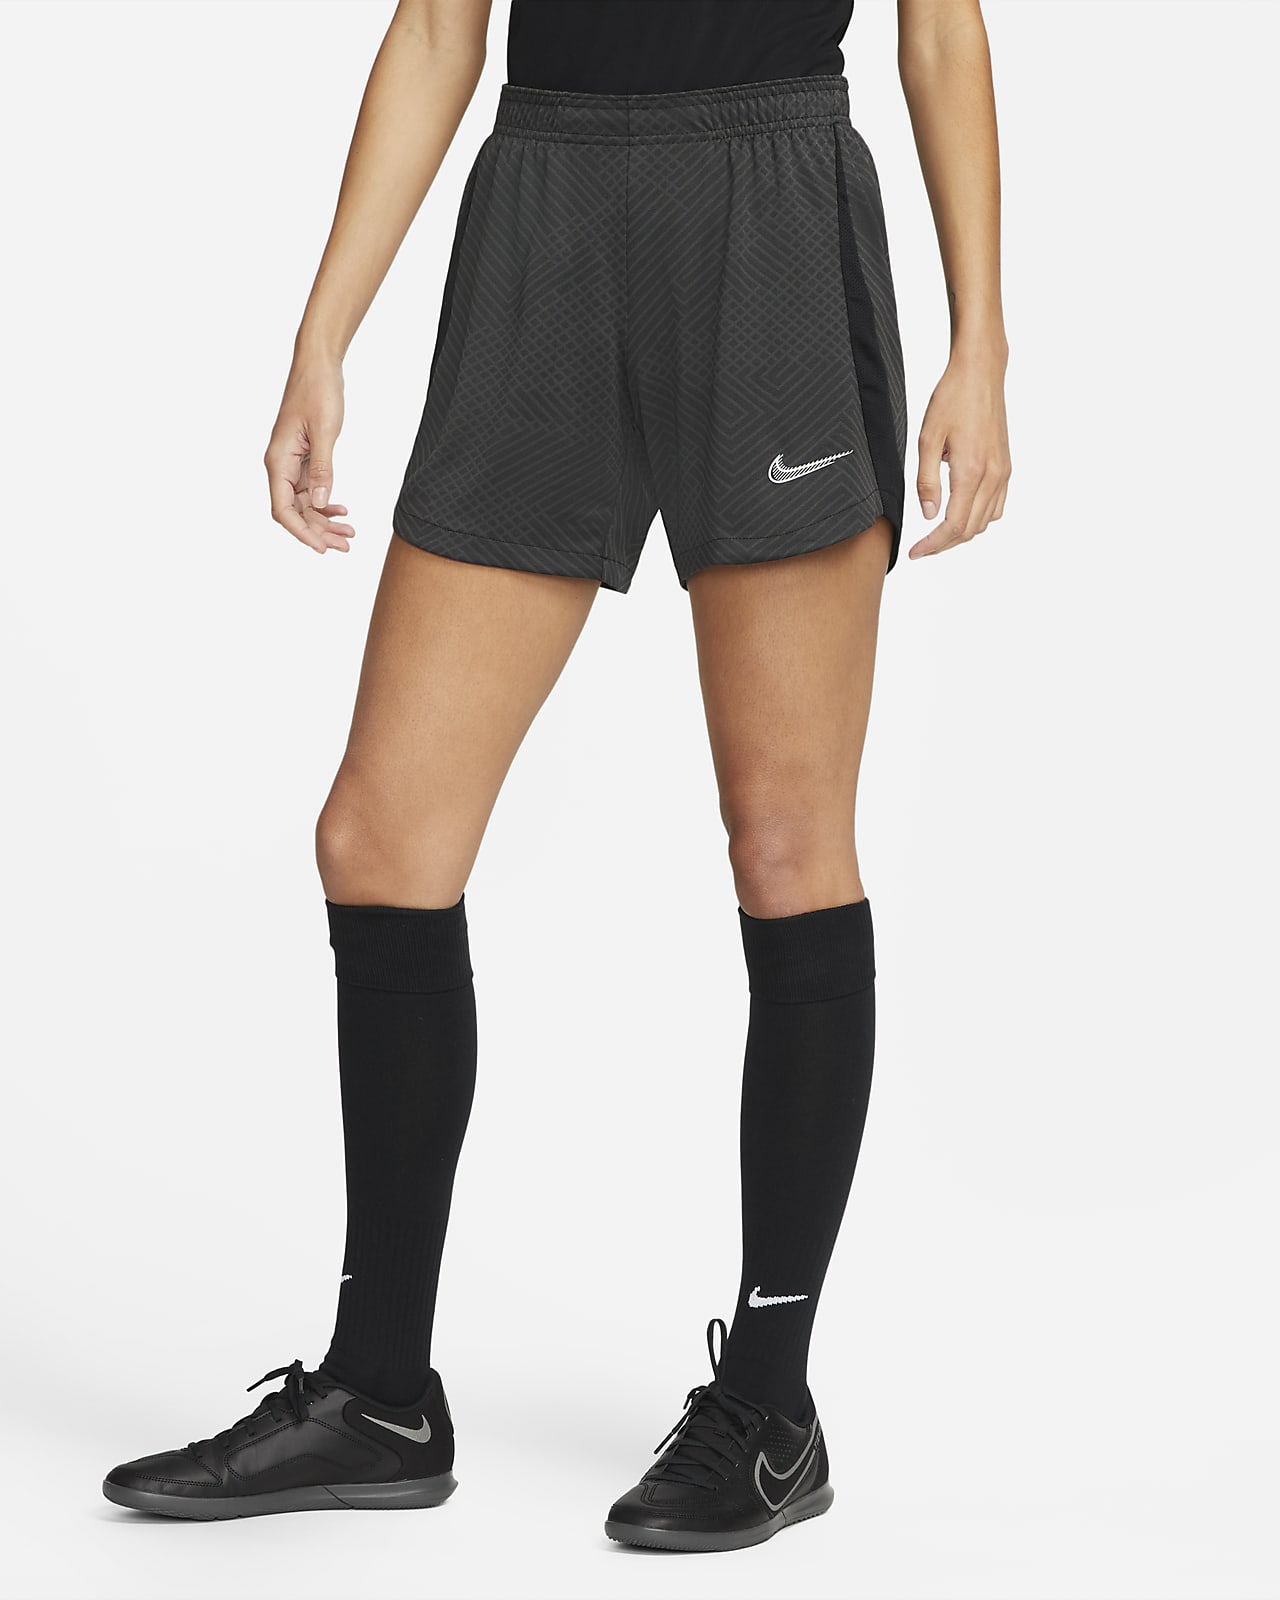 Mentalidad grado sarcoma Nike Dri-FIT Strike Pantalón corto de fútbol - Mujer. Nike ES